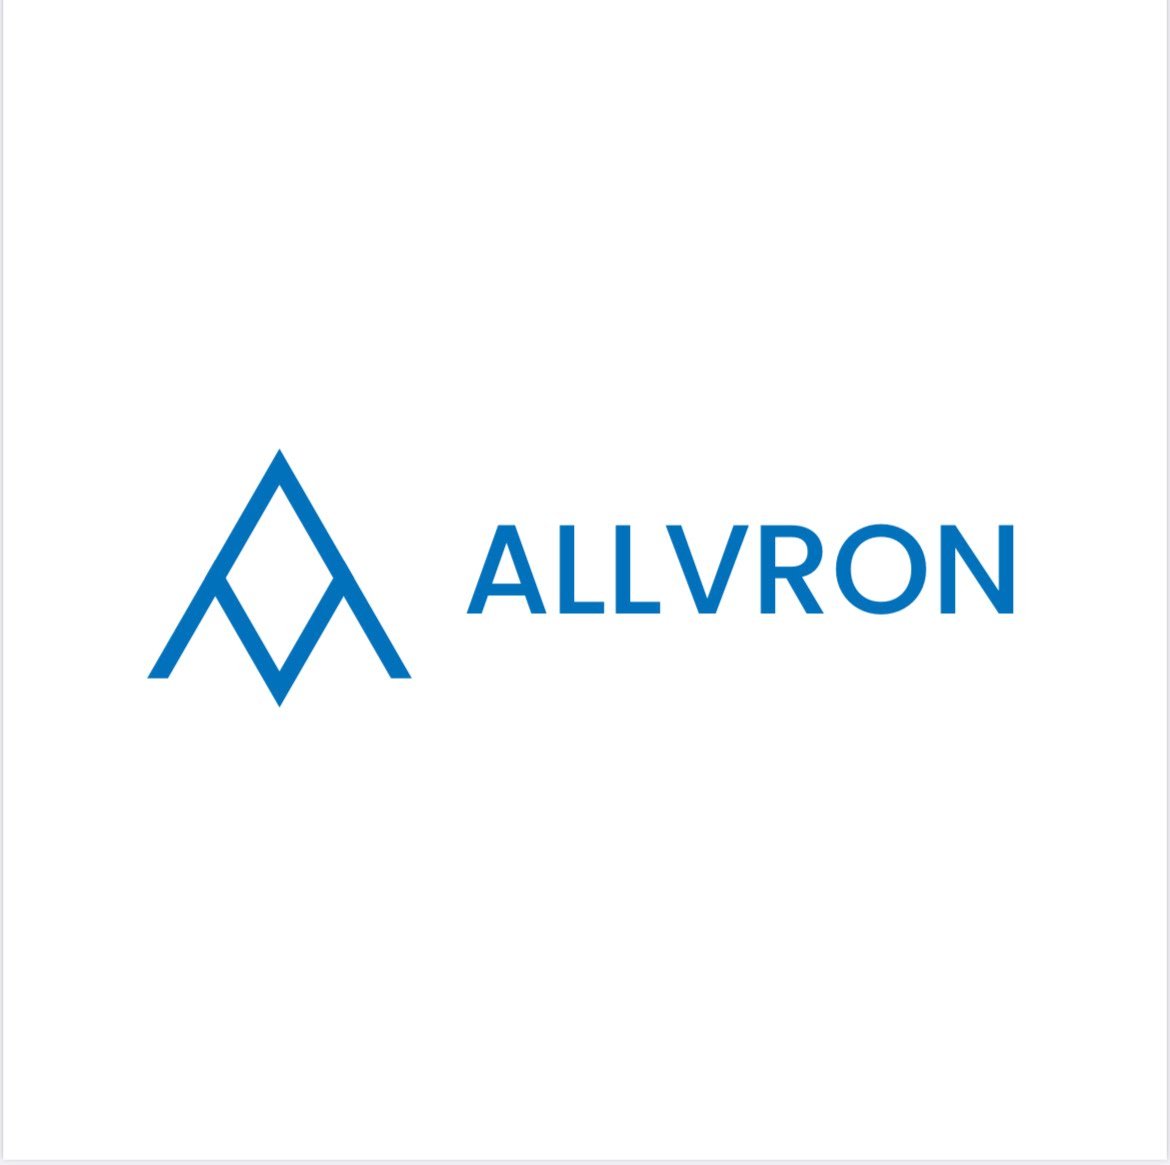 Allvron Business Services